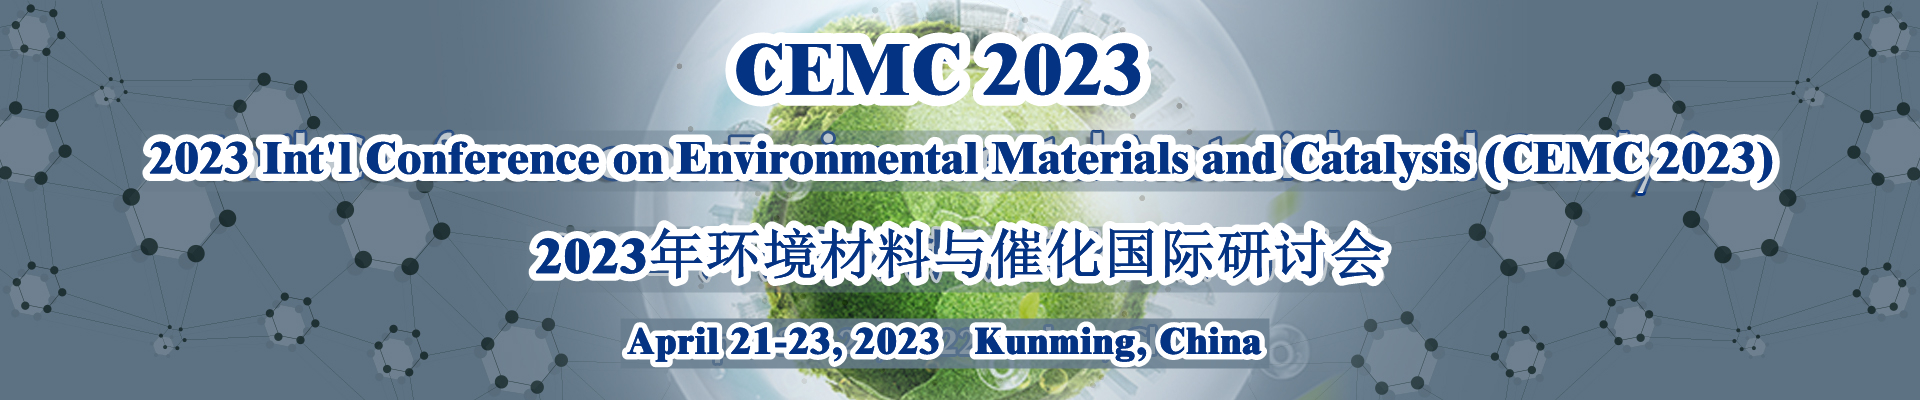 2023 Int'l Conference on Environmental Materials and Catalysis (CEMC 2023), Kunming, Yunnan, China